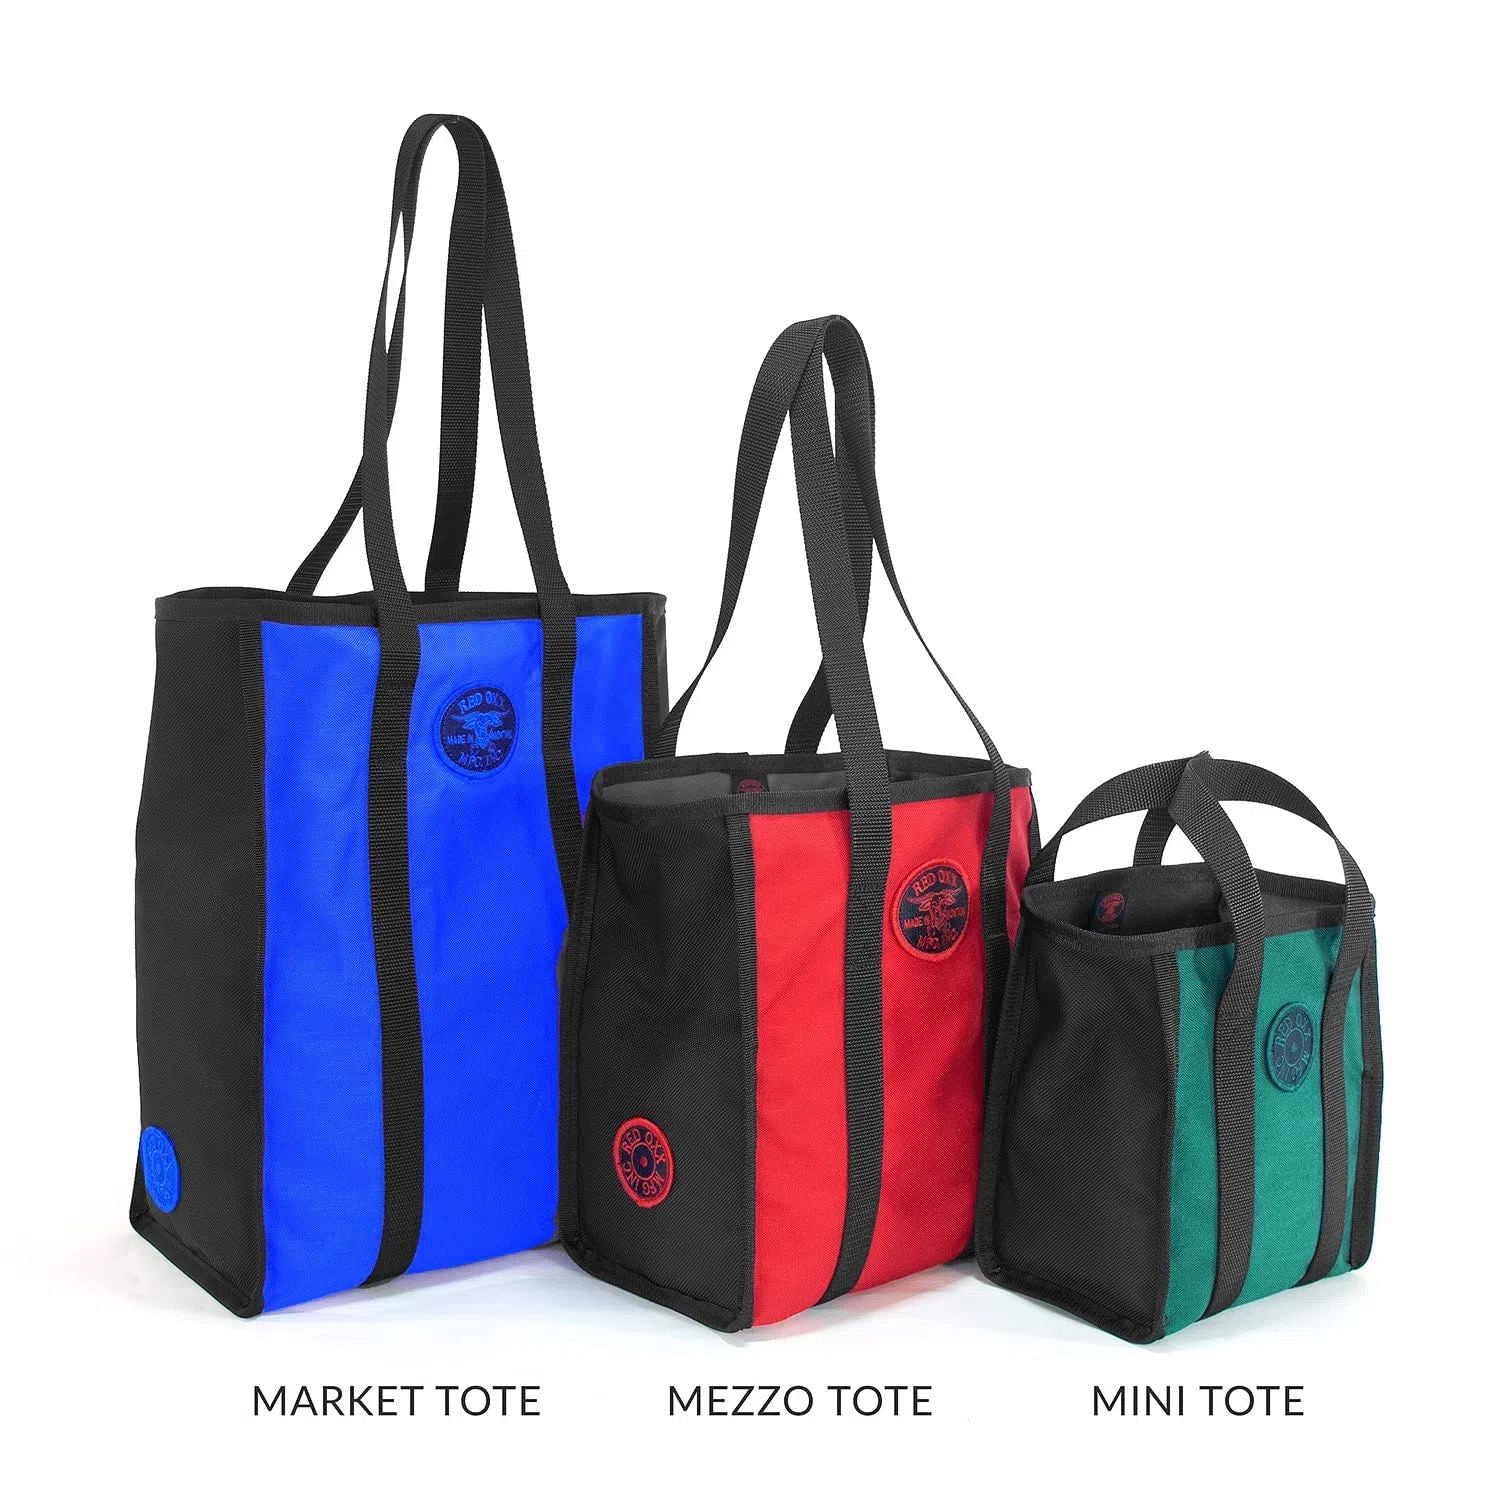 Red Oxx tote bags comparison from left to right.  Market Tote , Mezzo Tote and Mini Tote. 